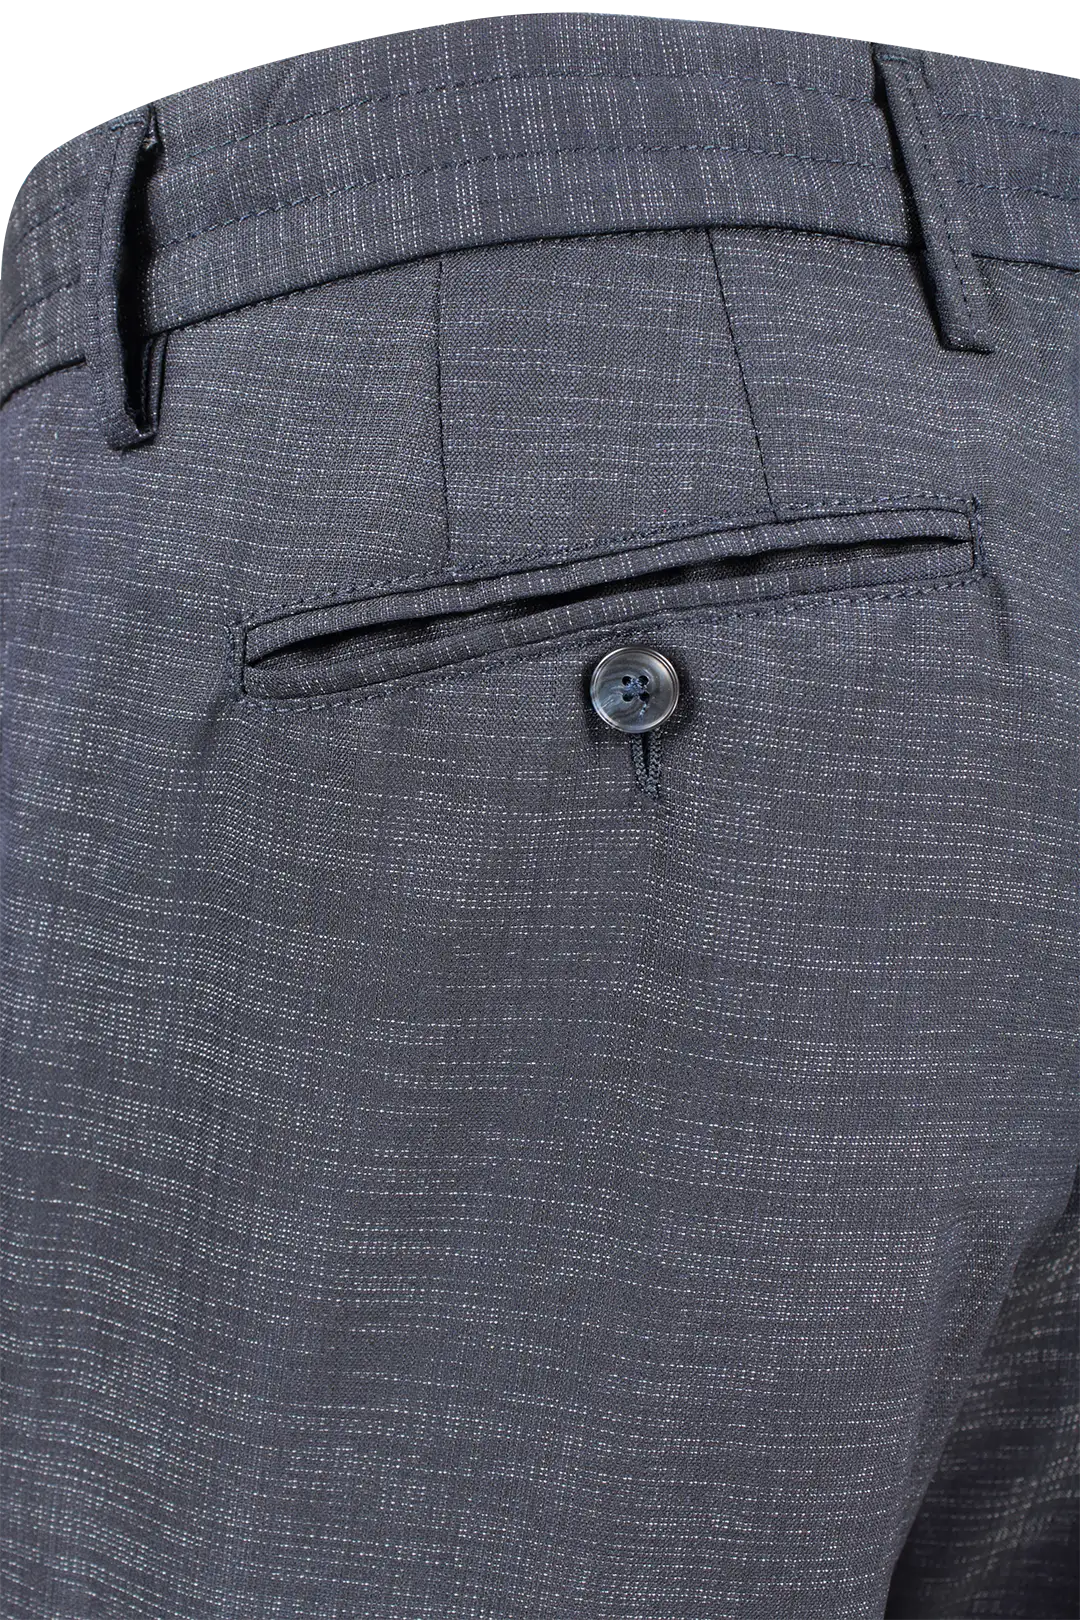 Pantalone con pince e coulisse in lana operata blu taschino